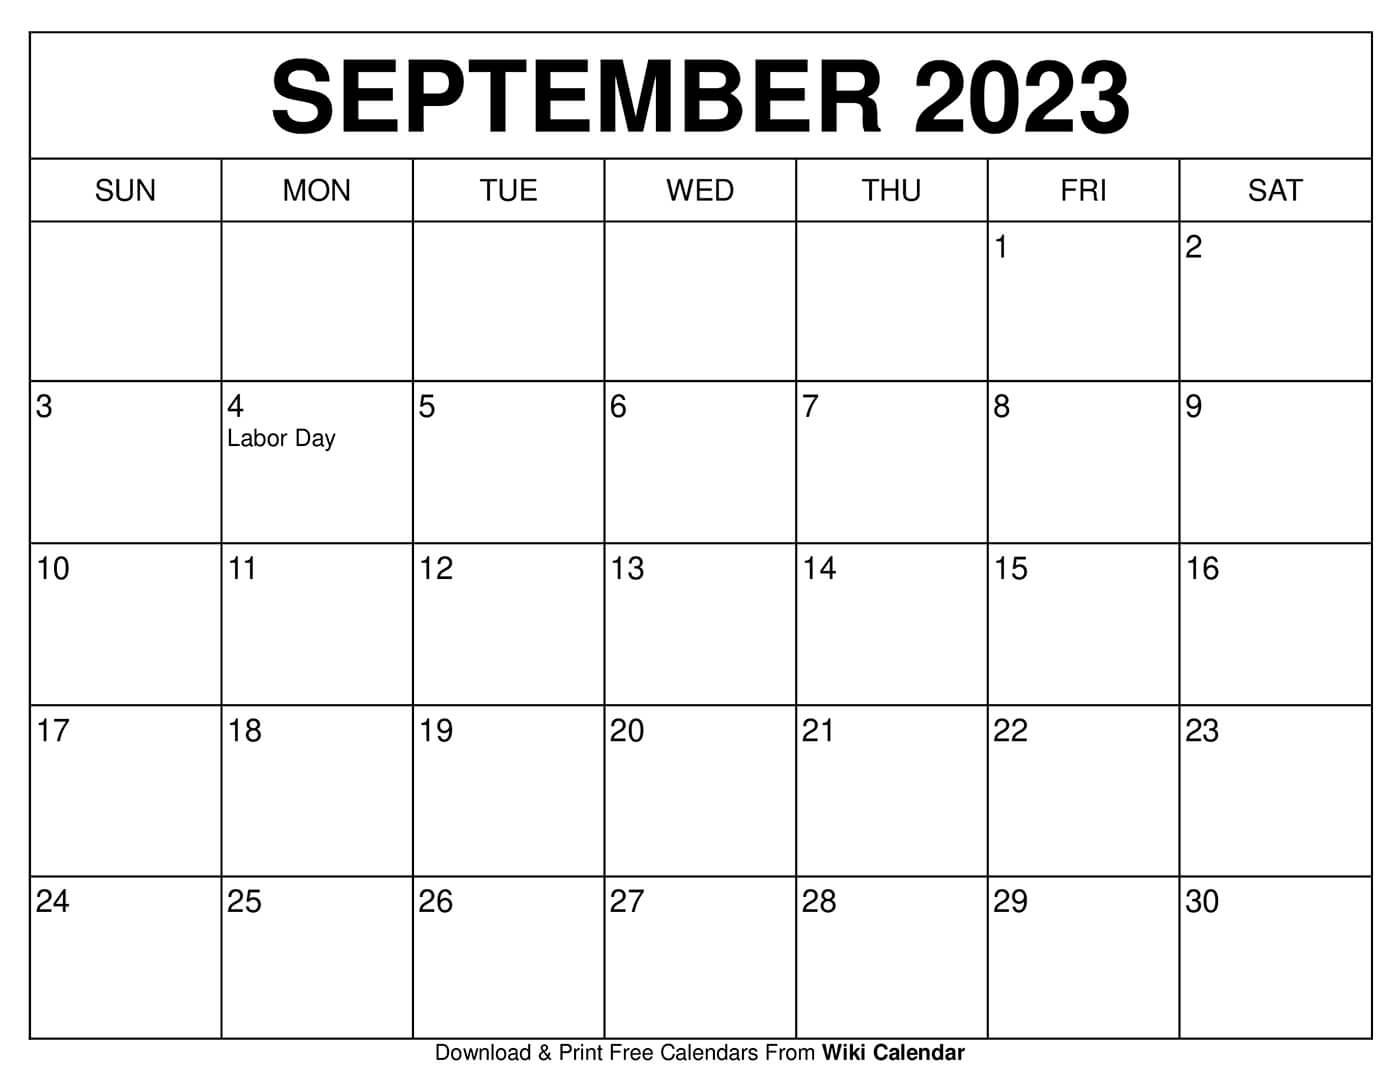 Free Printable September 2023 Calendar Templates With Holidays Wiki 